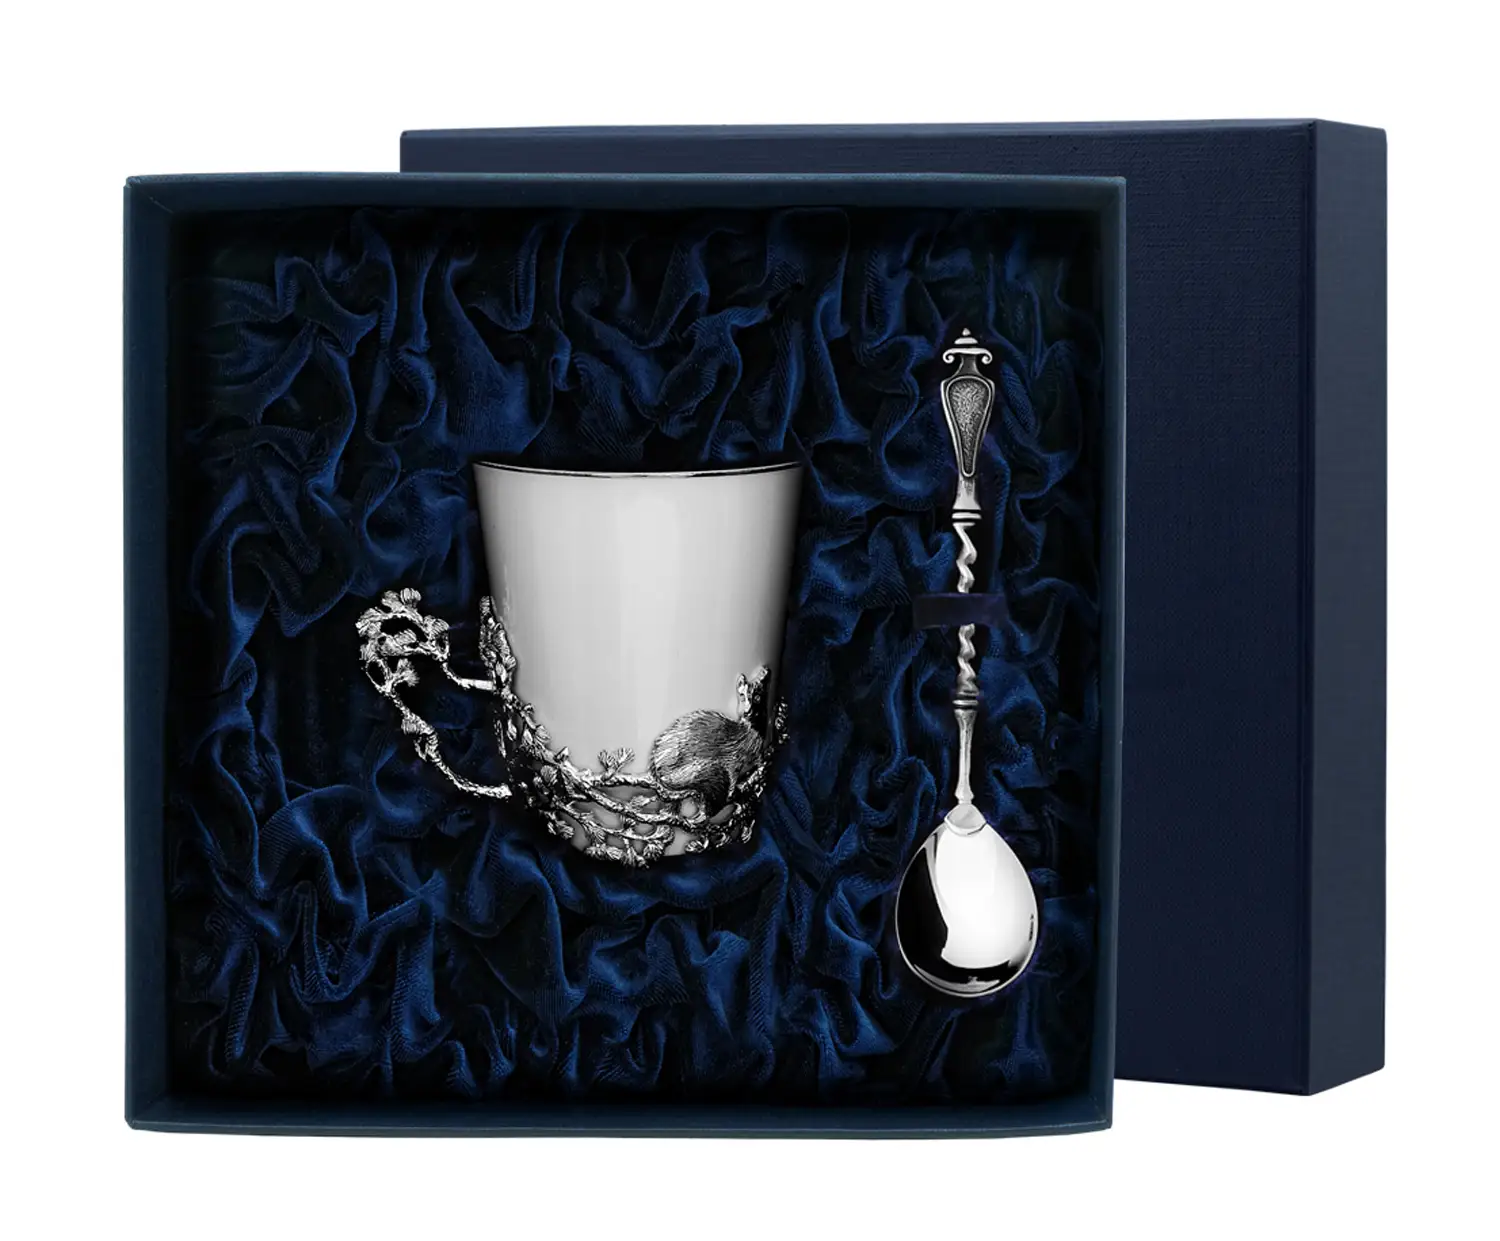 Набор чайная чашка Куница: ложка, чашка (Серебро 925) набор чайная чашка куница ложка чашка серебро 925